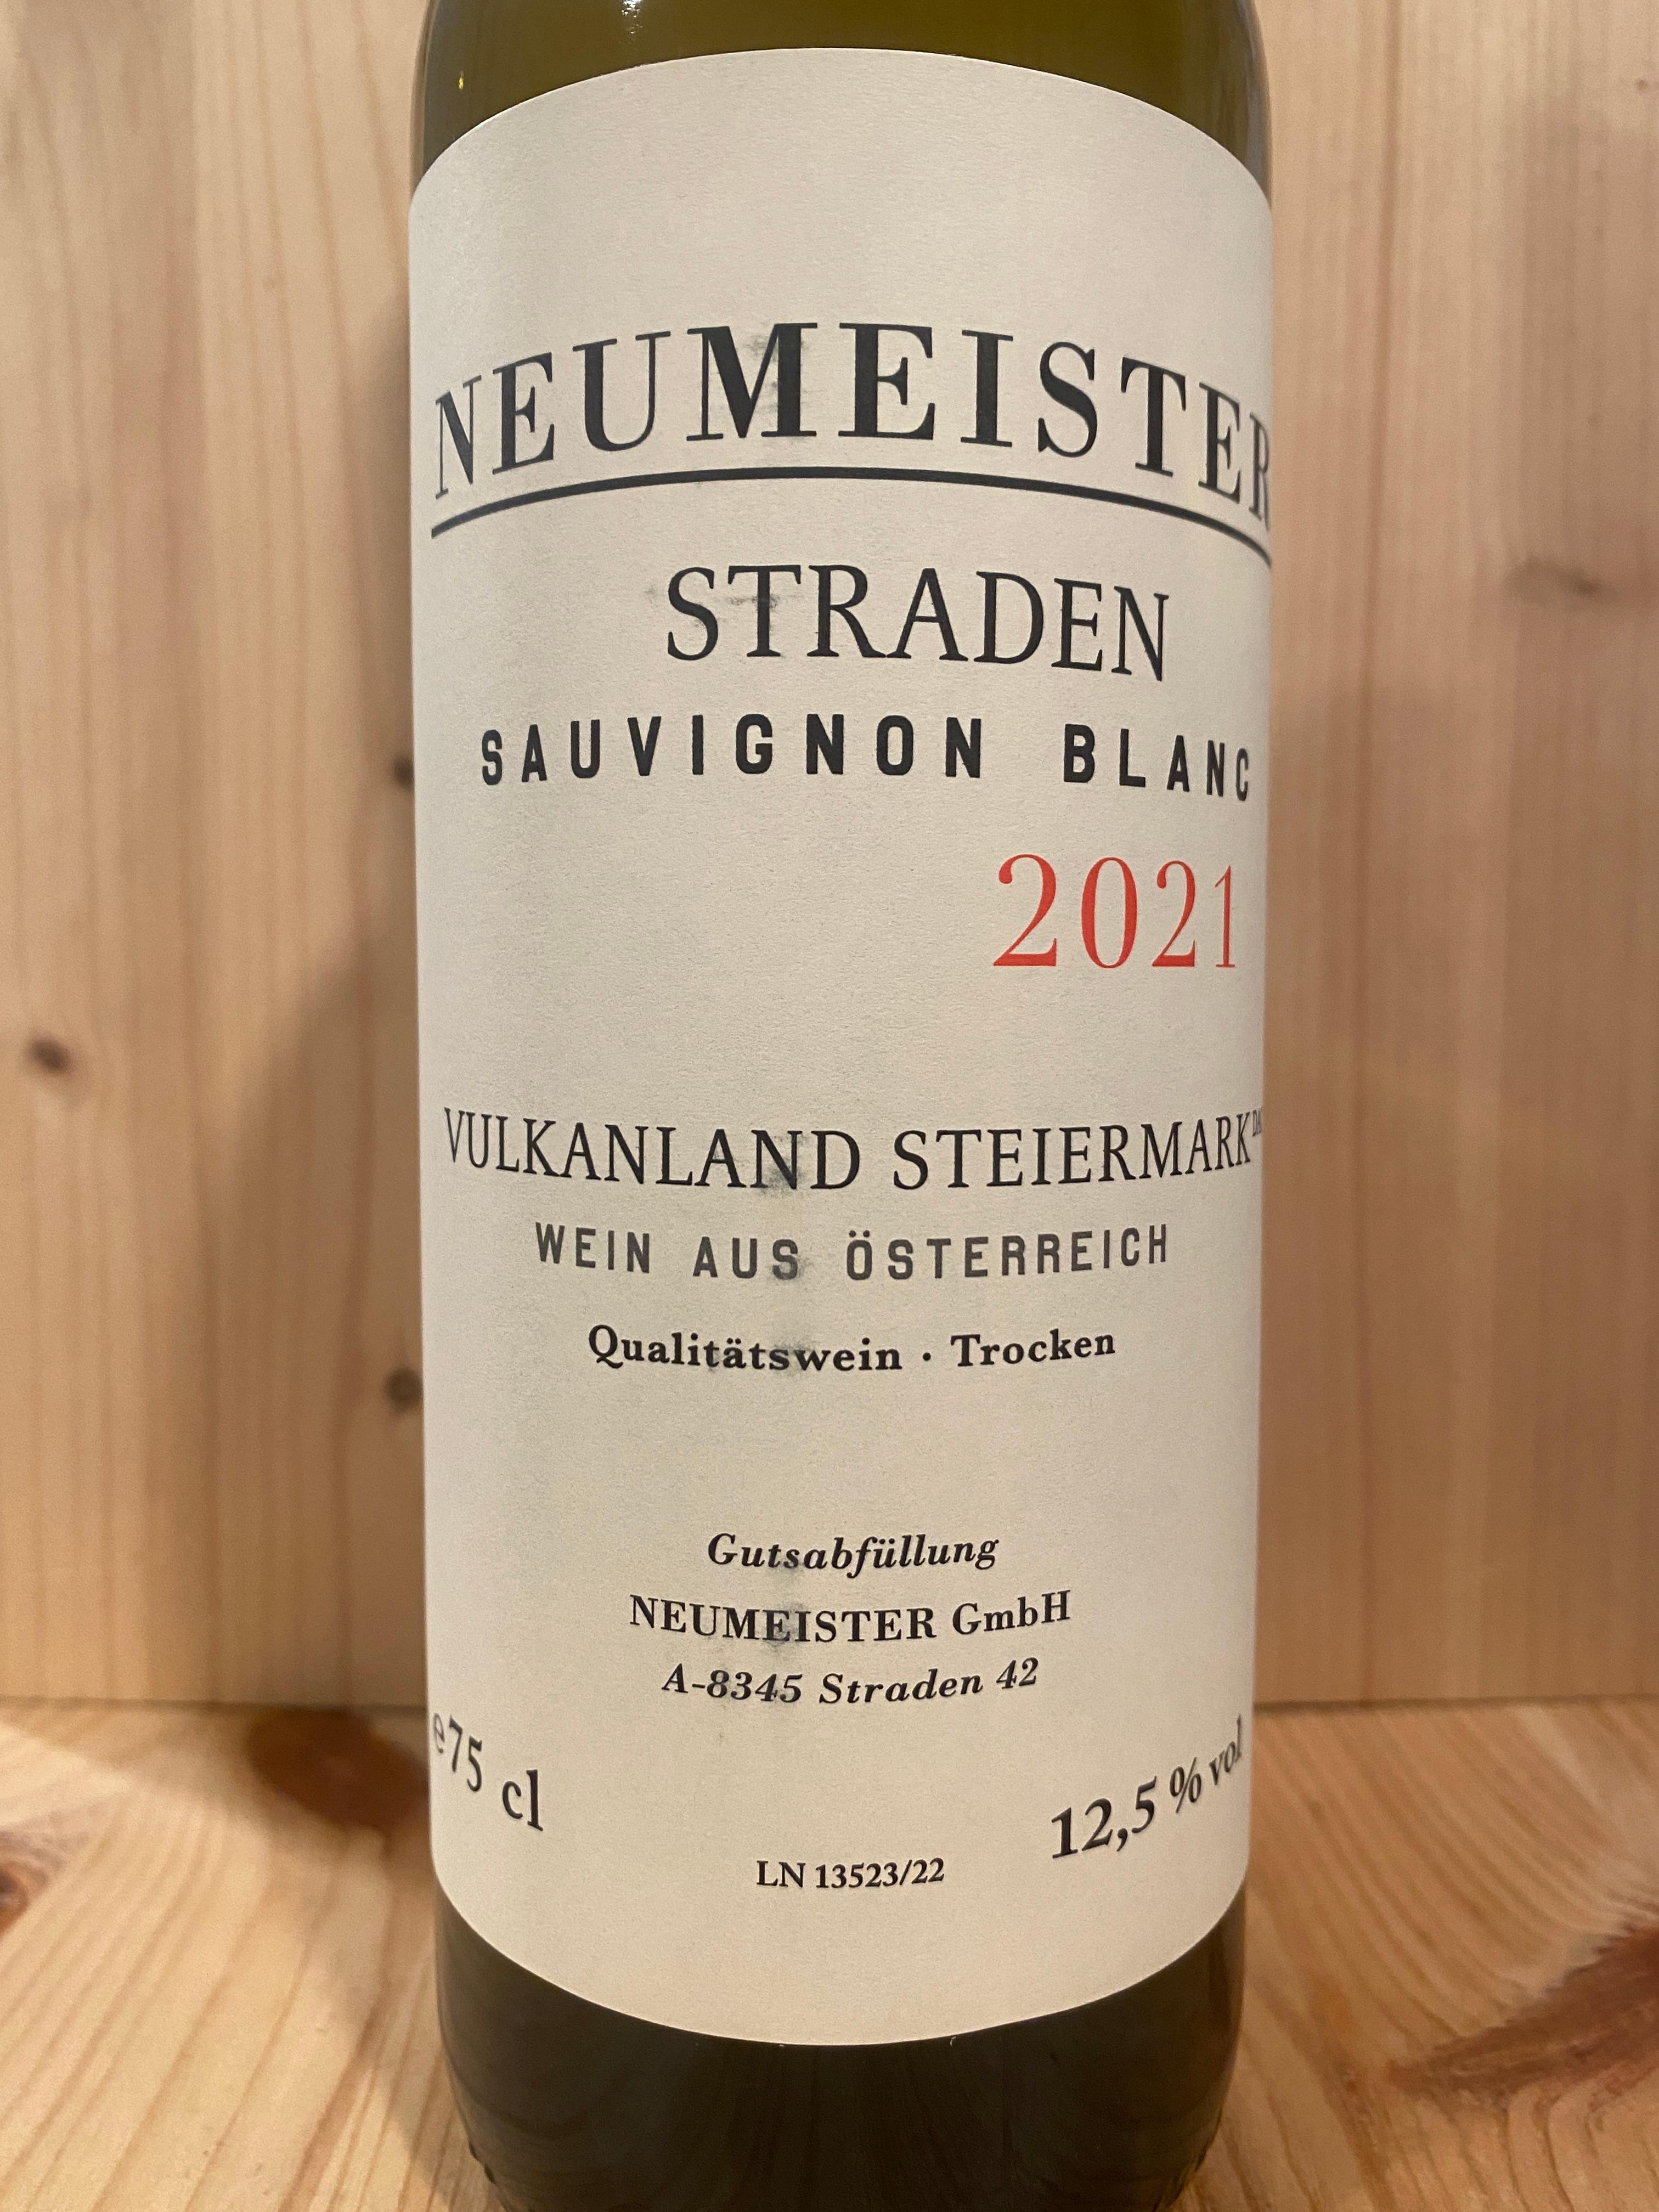 Neumeister "Straden" Sauvignon Blanc 2021: Vulkanland Steiermark, Styria, Austria